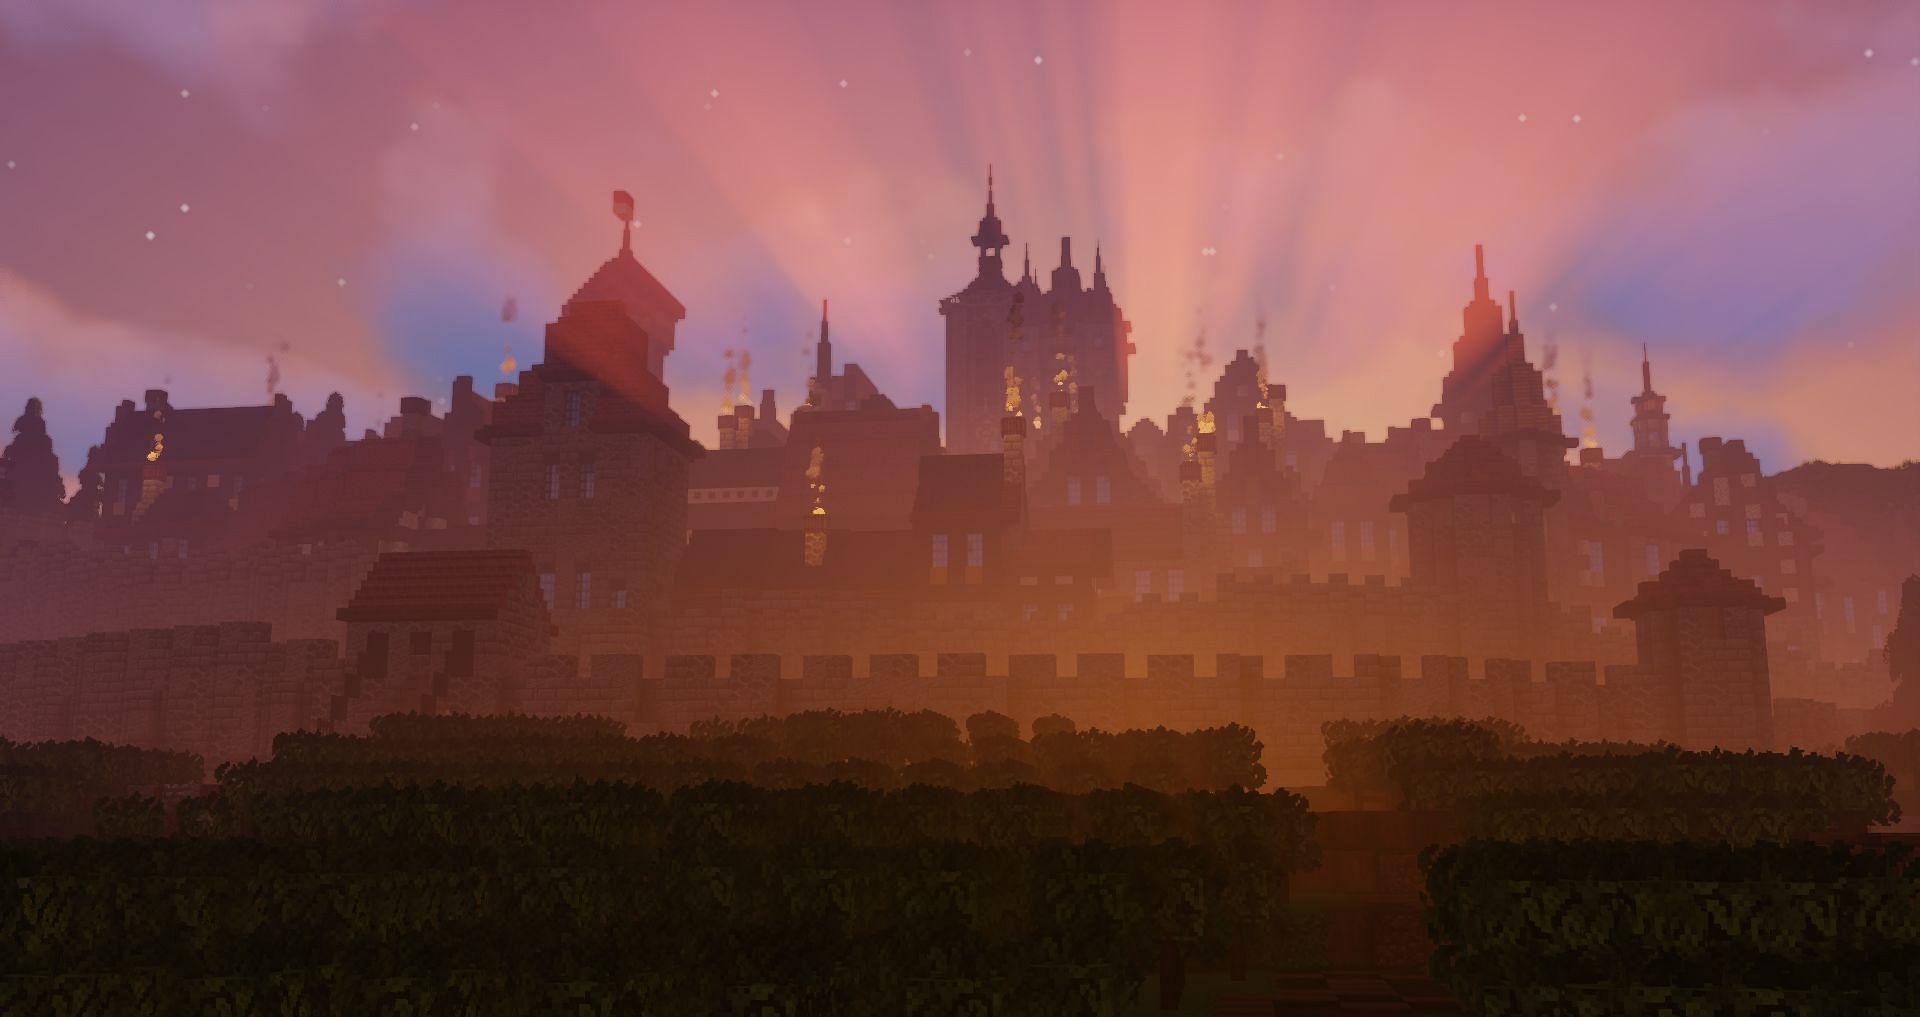 The medieval town build seen during sunset/sunrise (Image via u/TytaRex|Reddit)